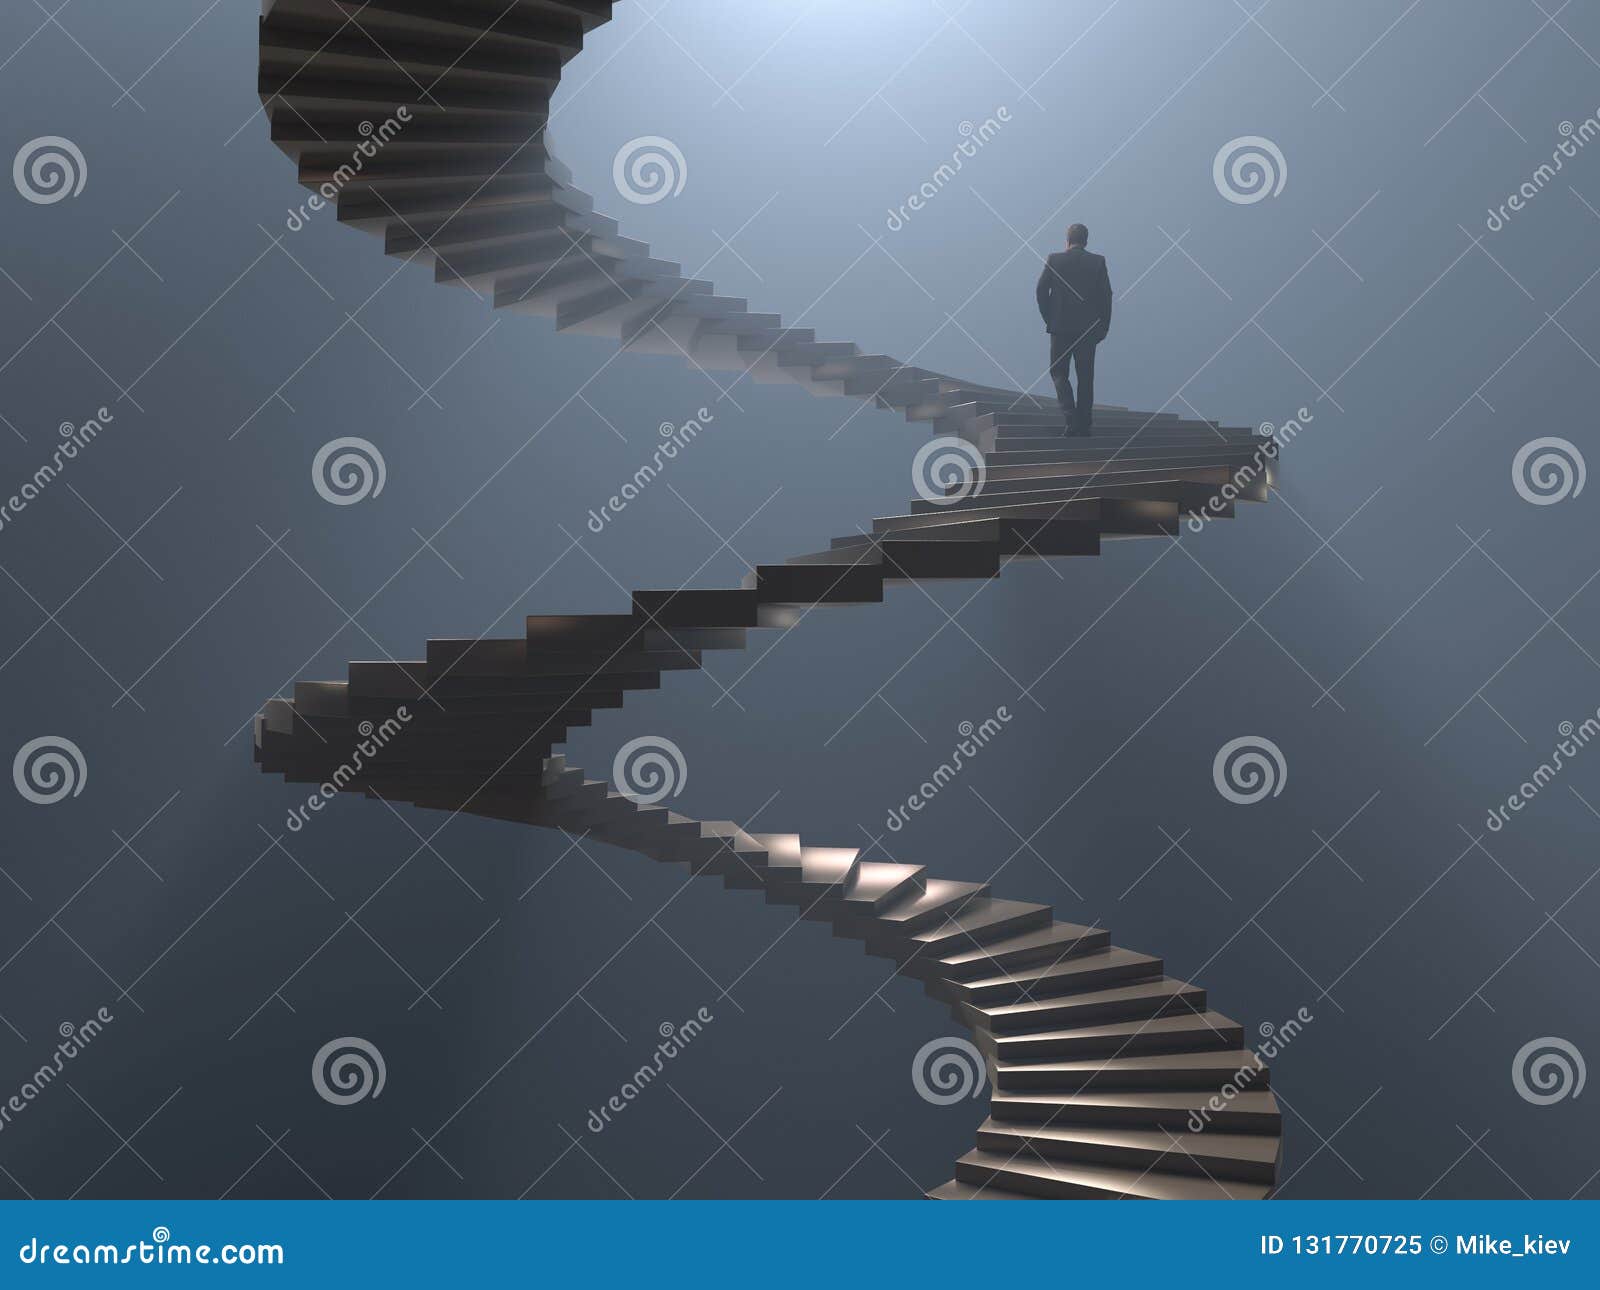 man climbs the spiral staircase